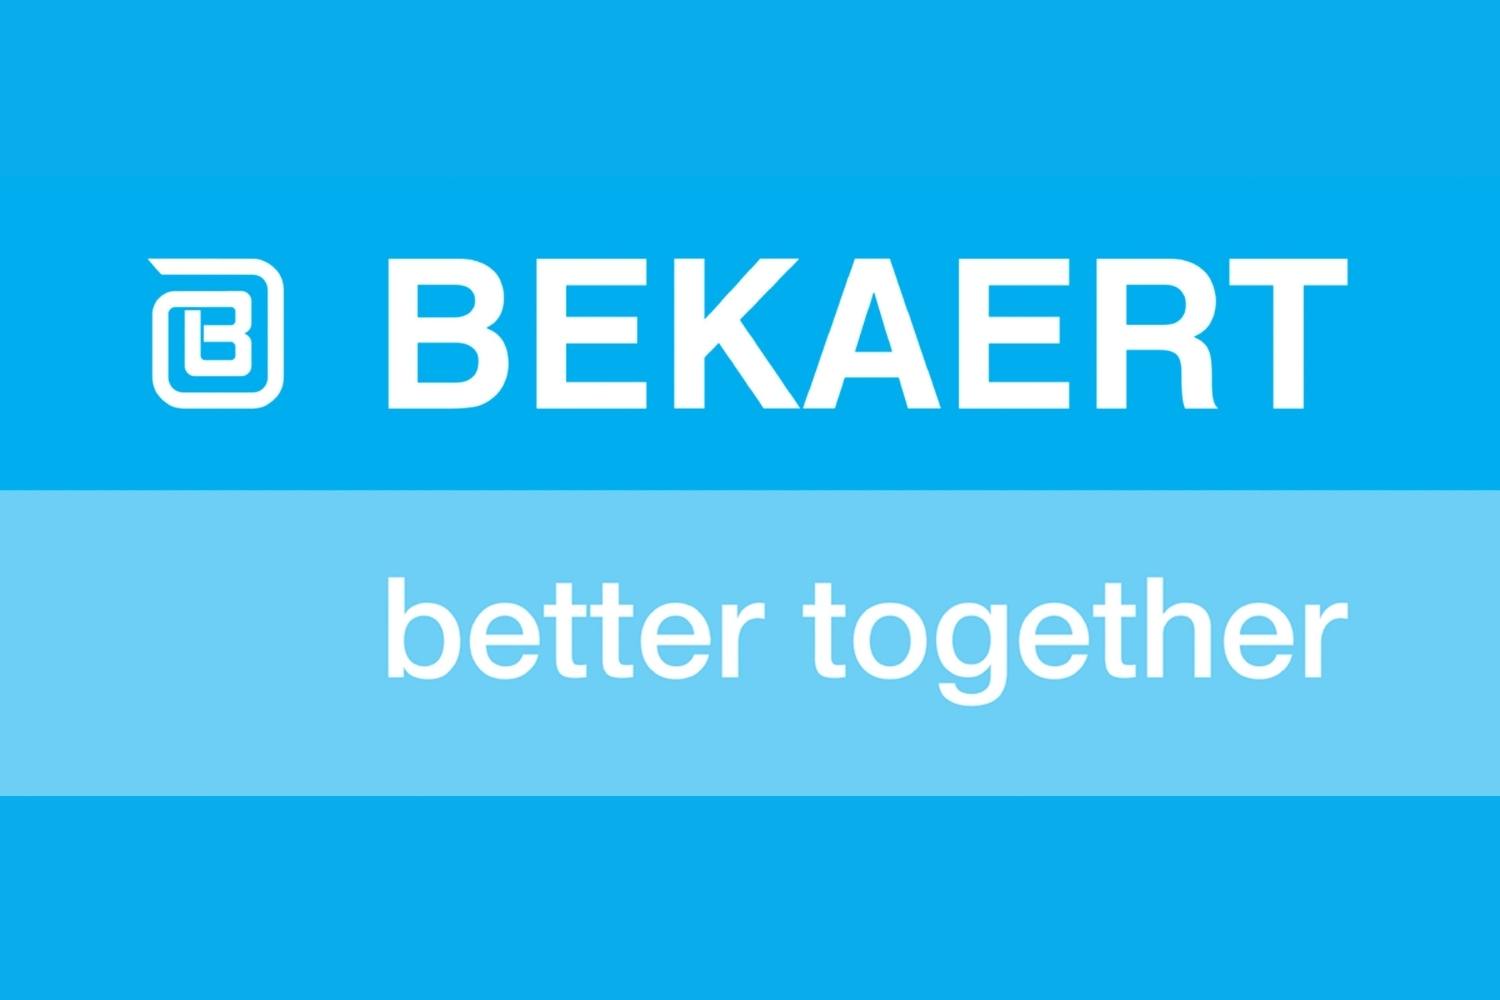 We've partnered with Bekaert!